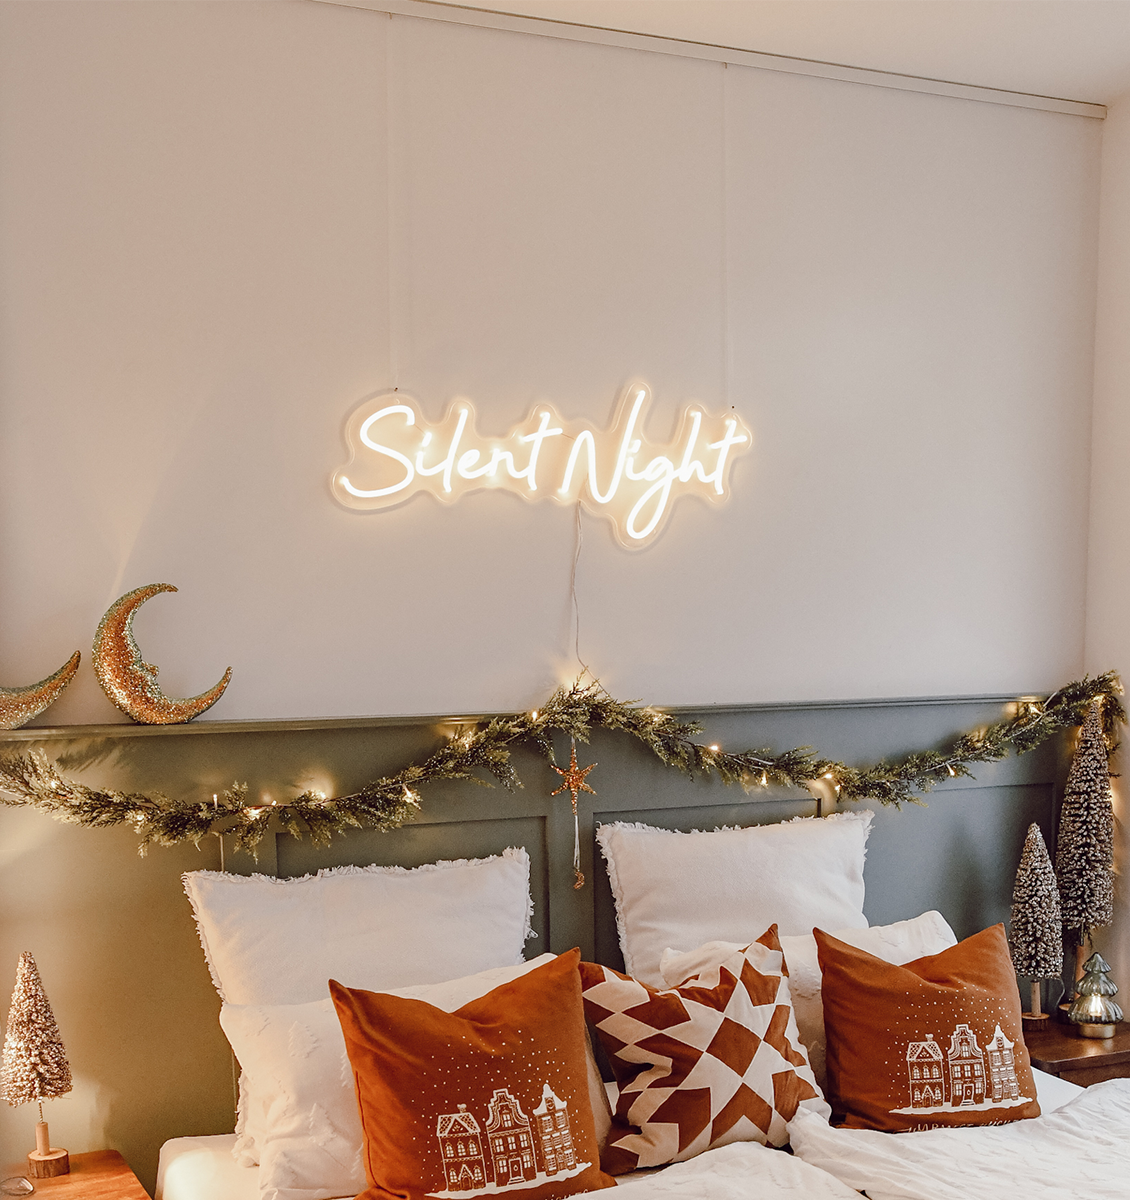 NL ledlamp met tekst aan muur in slaapkamer boven bed